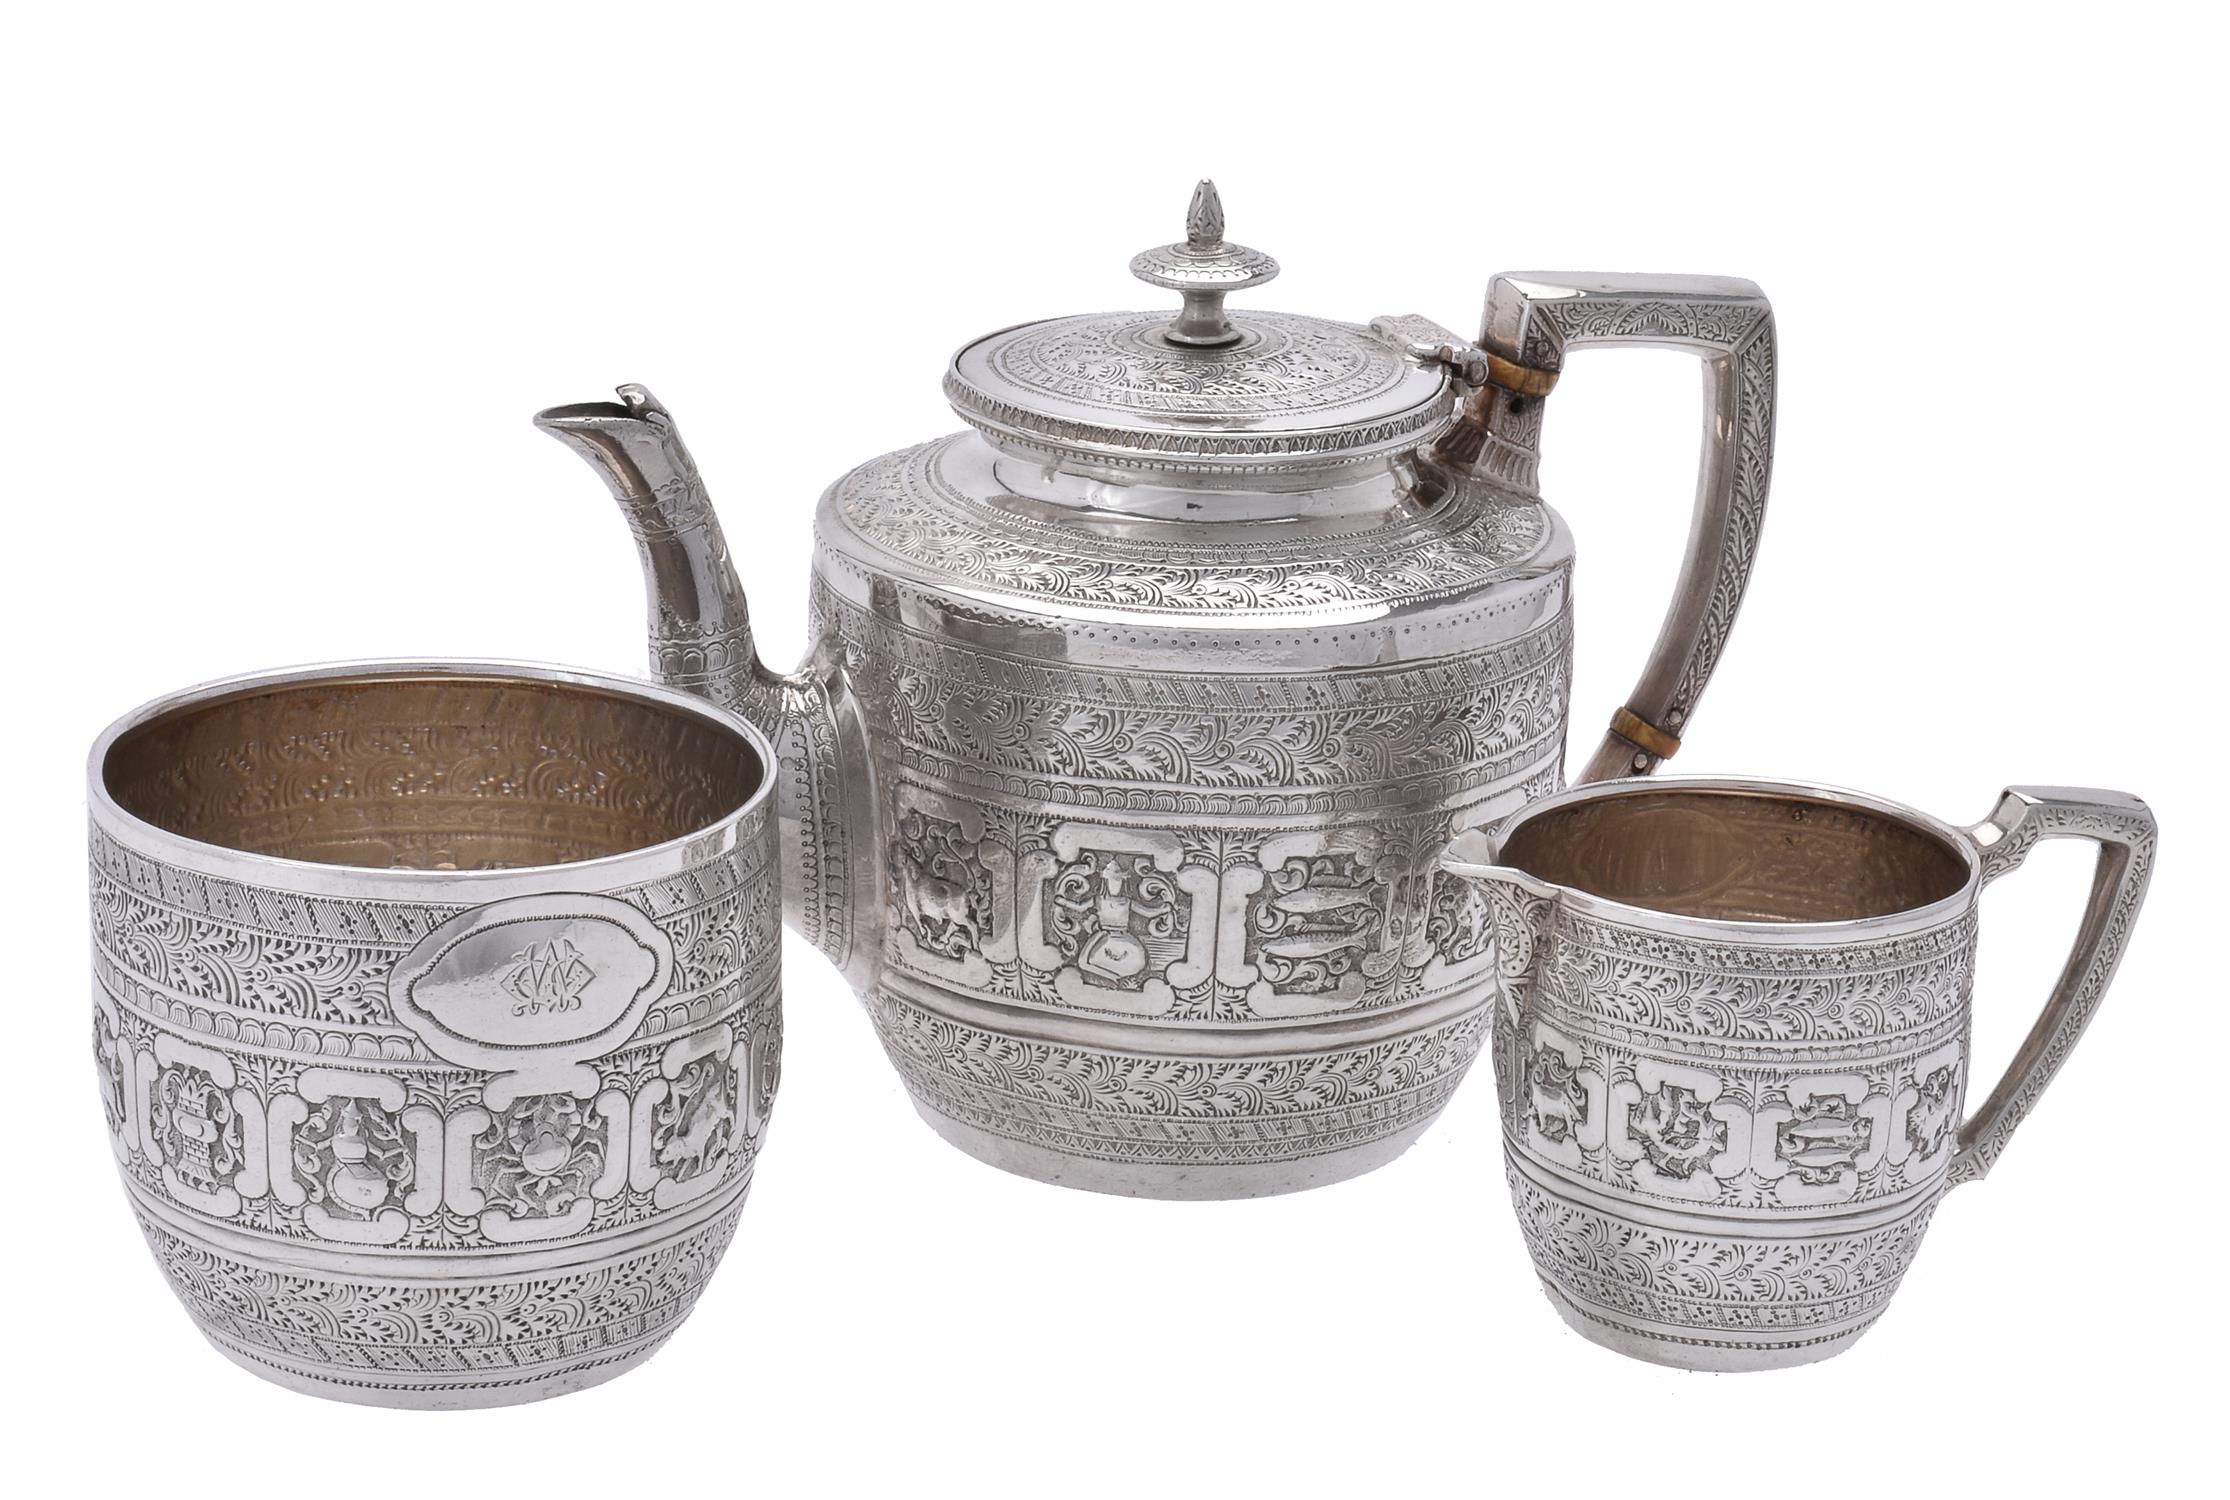 Y A Victorian Indian style three piece tea set by David Crichton Rait